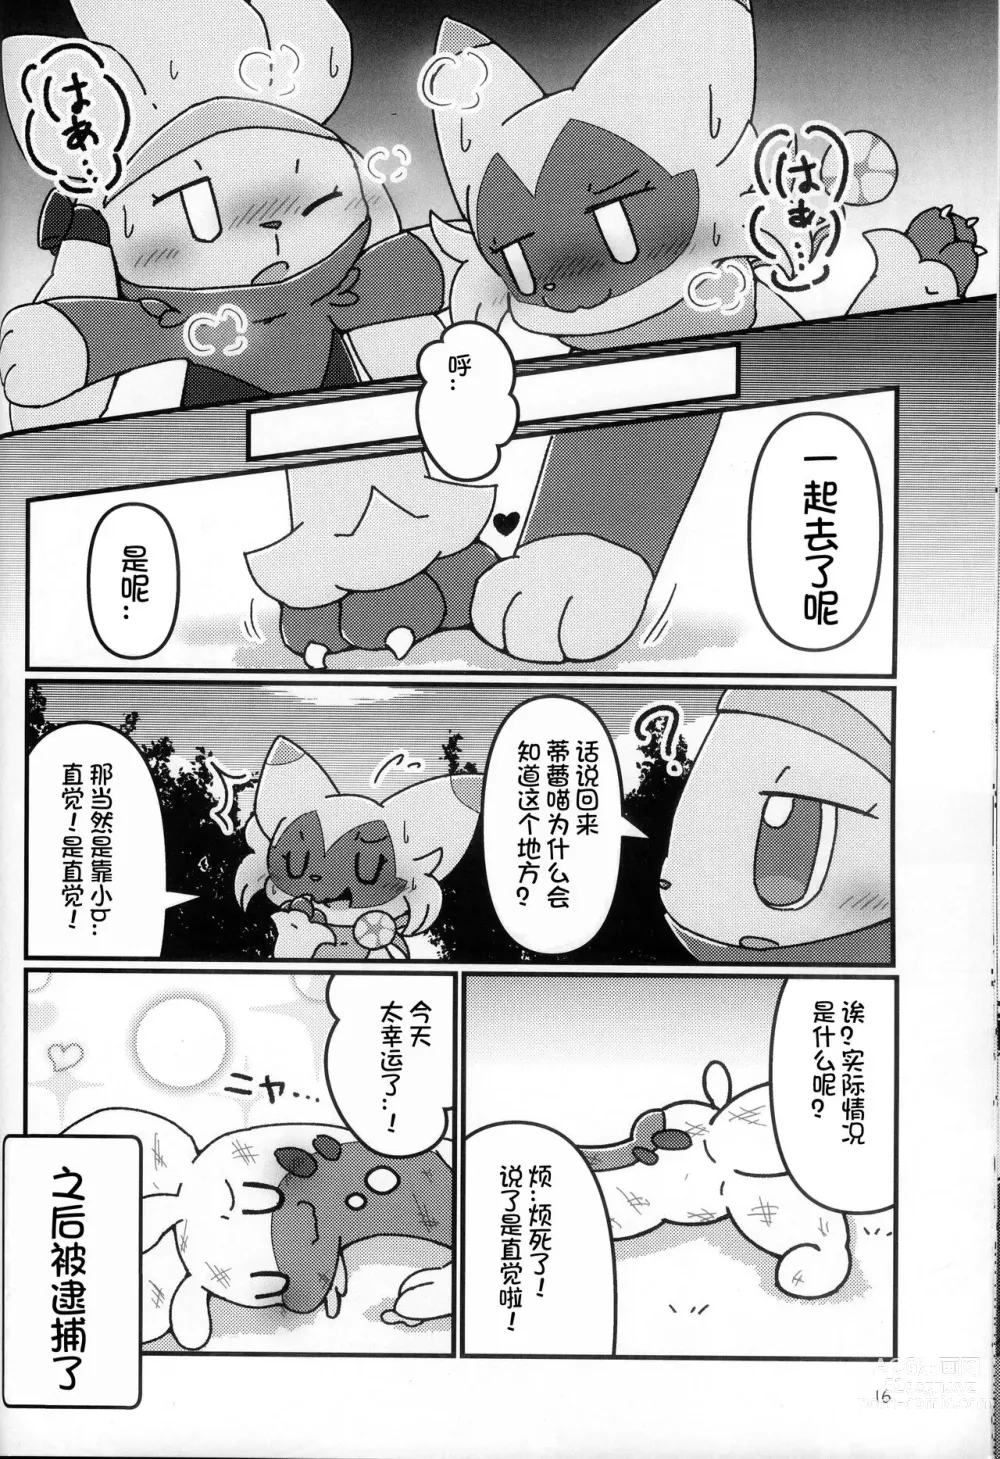 Page 16 of doujinshi 猫与兔